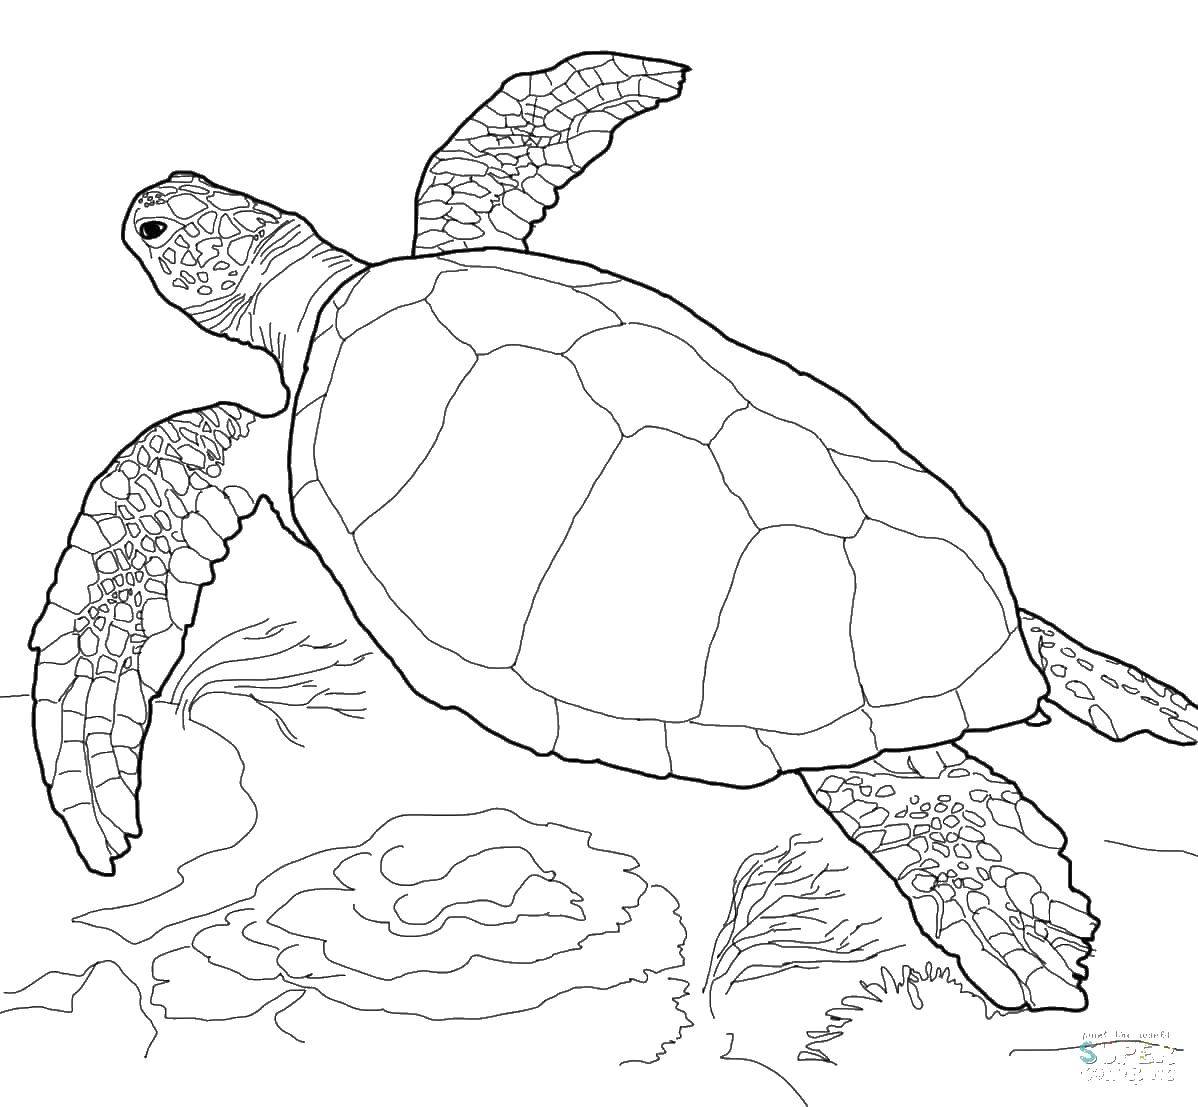 Coloring The turtle swims. Category teenage mutant ninja turtles. Tags:  animals, turtle, water, sea.